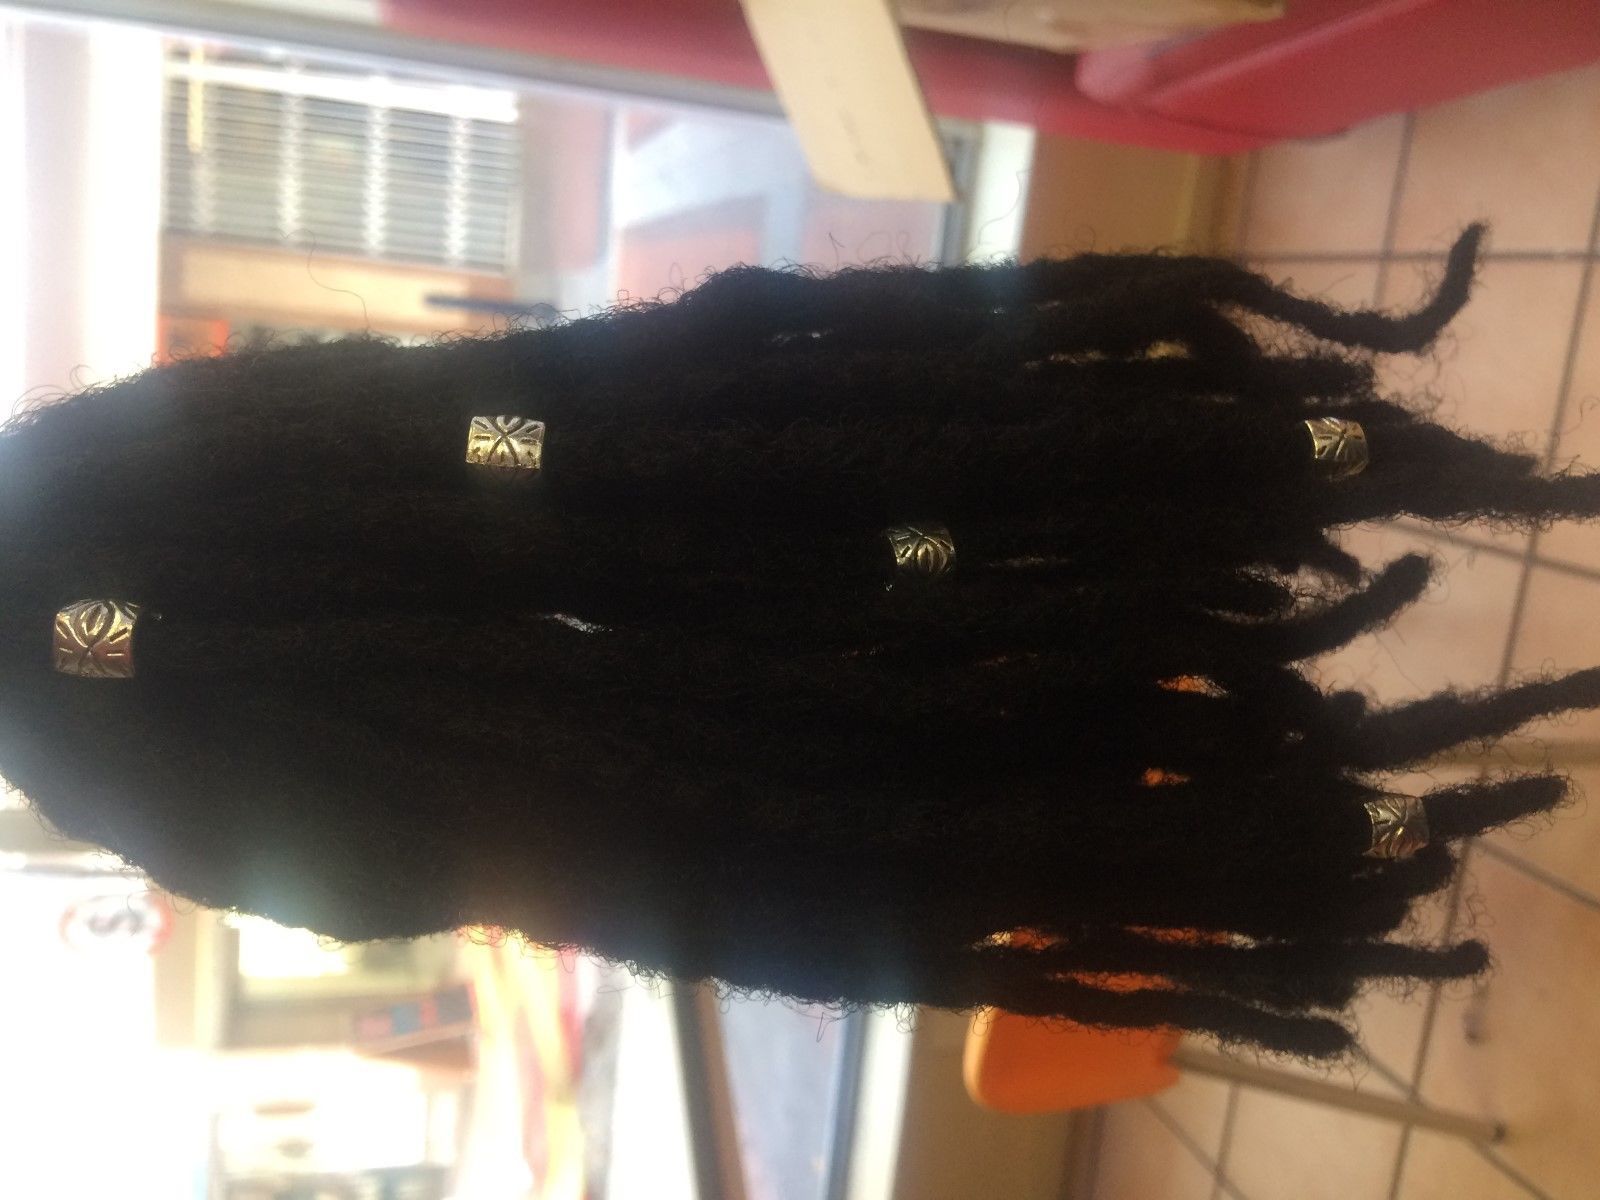 20pcs human hair extensions dreadlocks 16" inches - $95.04